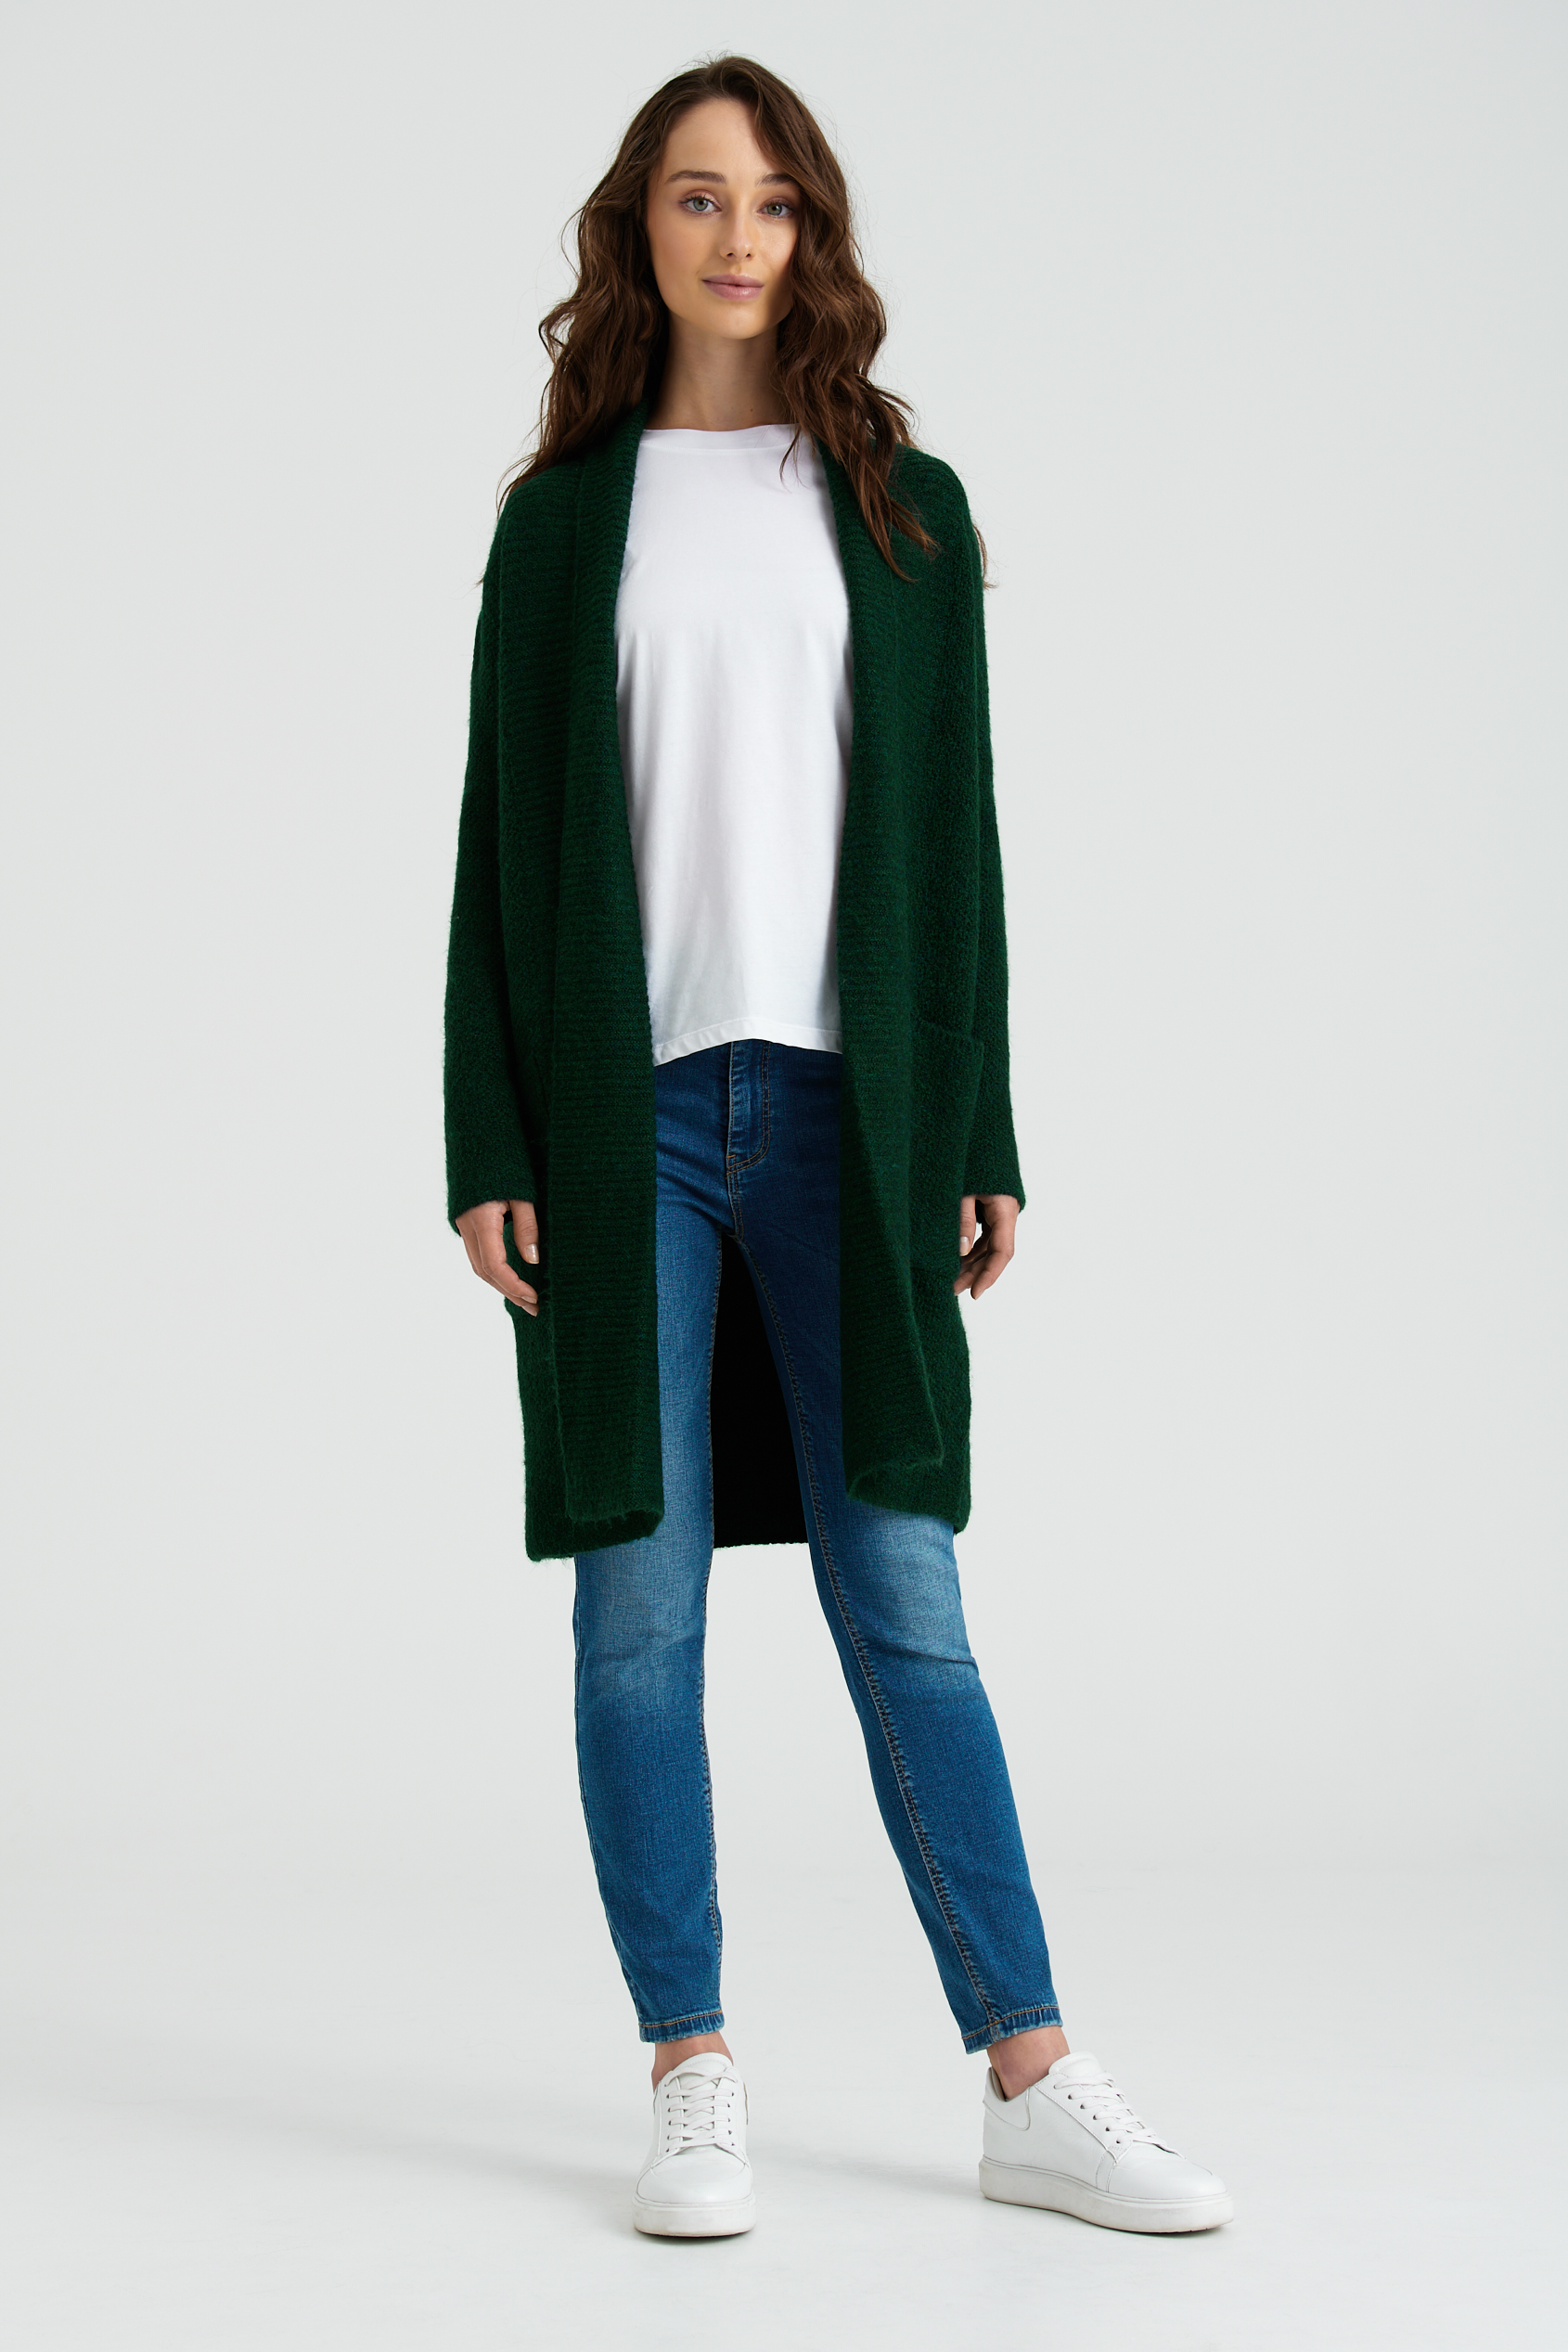 Greenpoint Woman's Sweater SWE631W2279X00